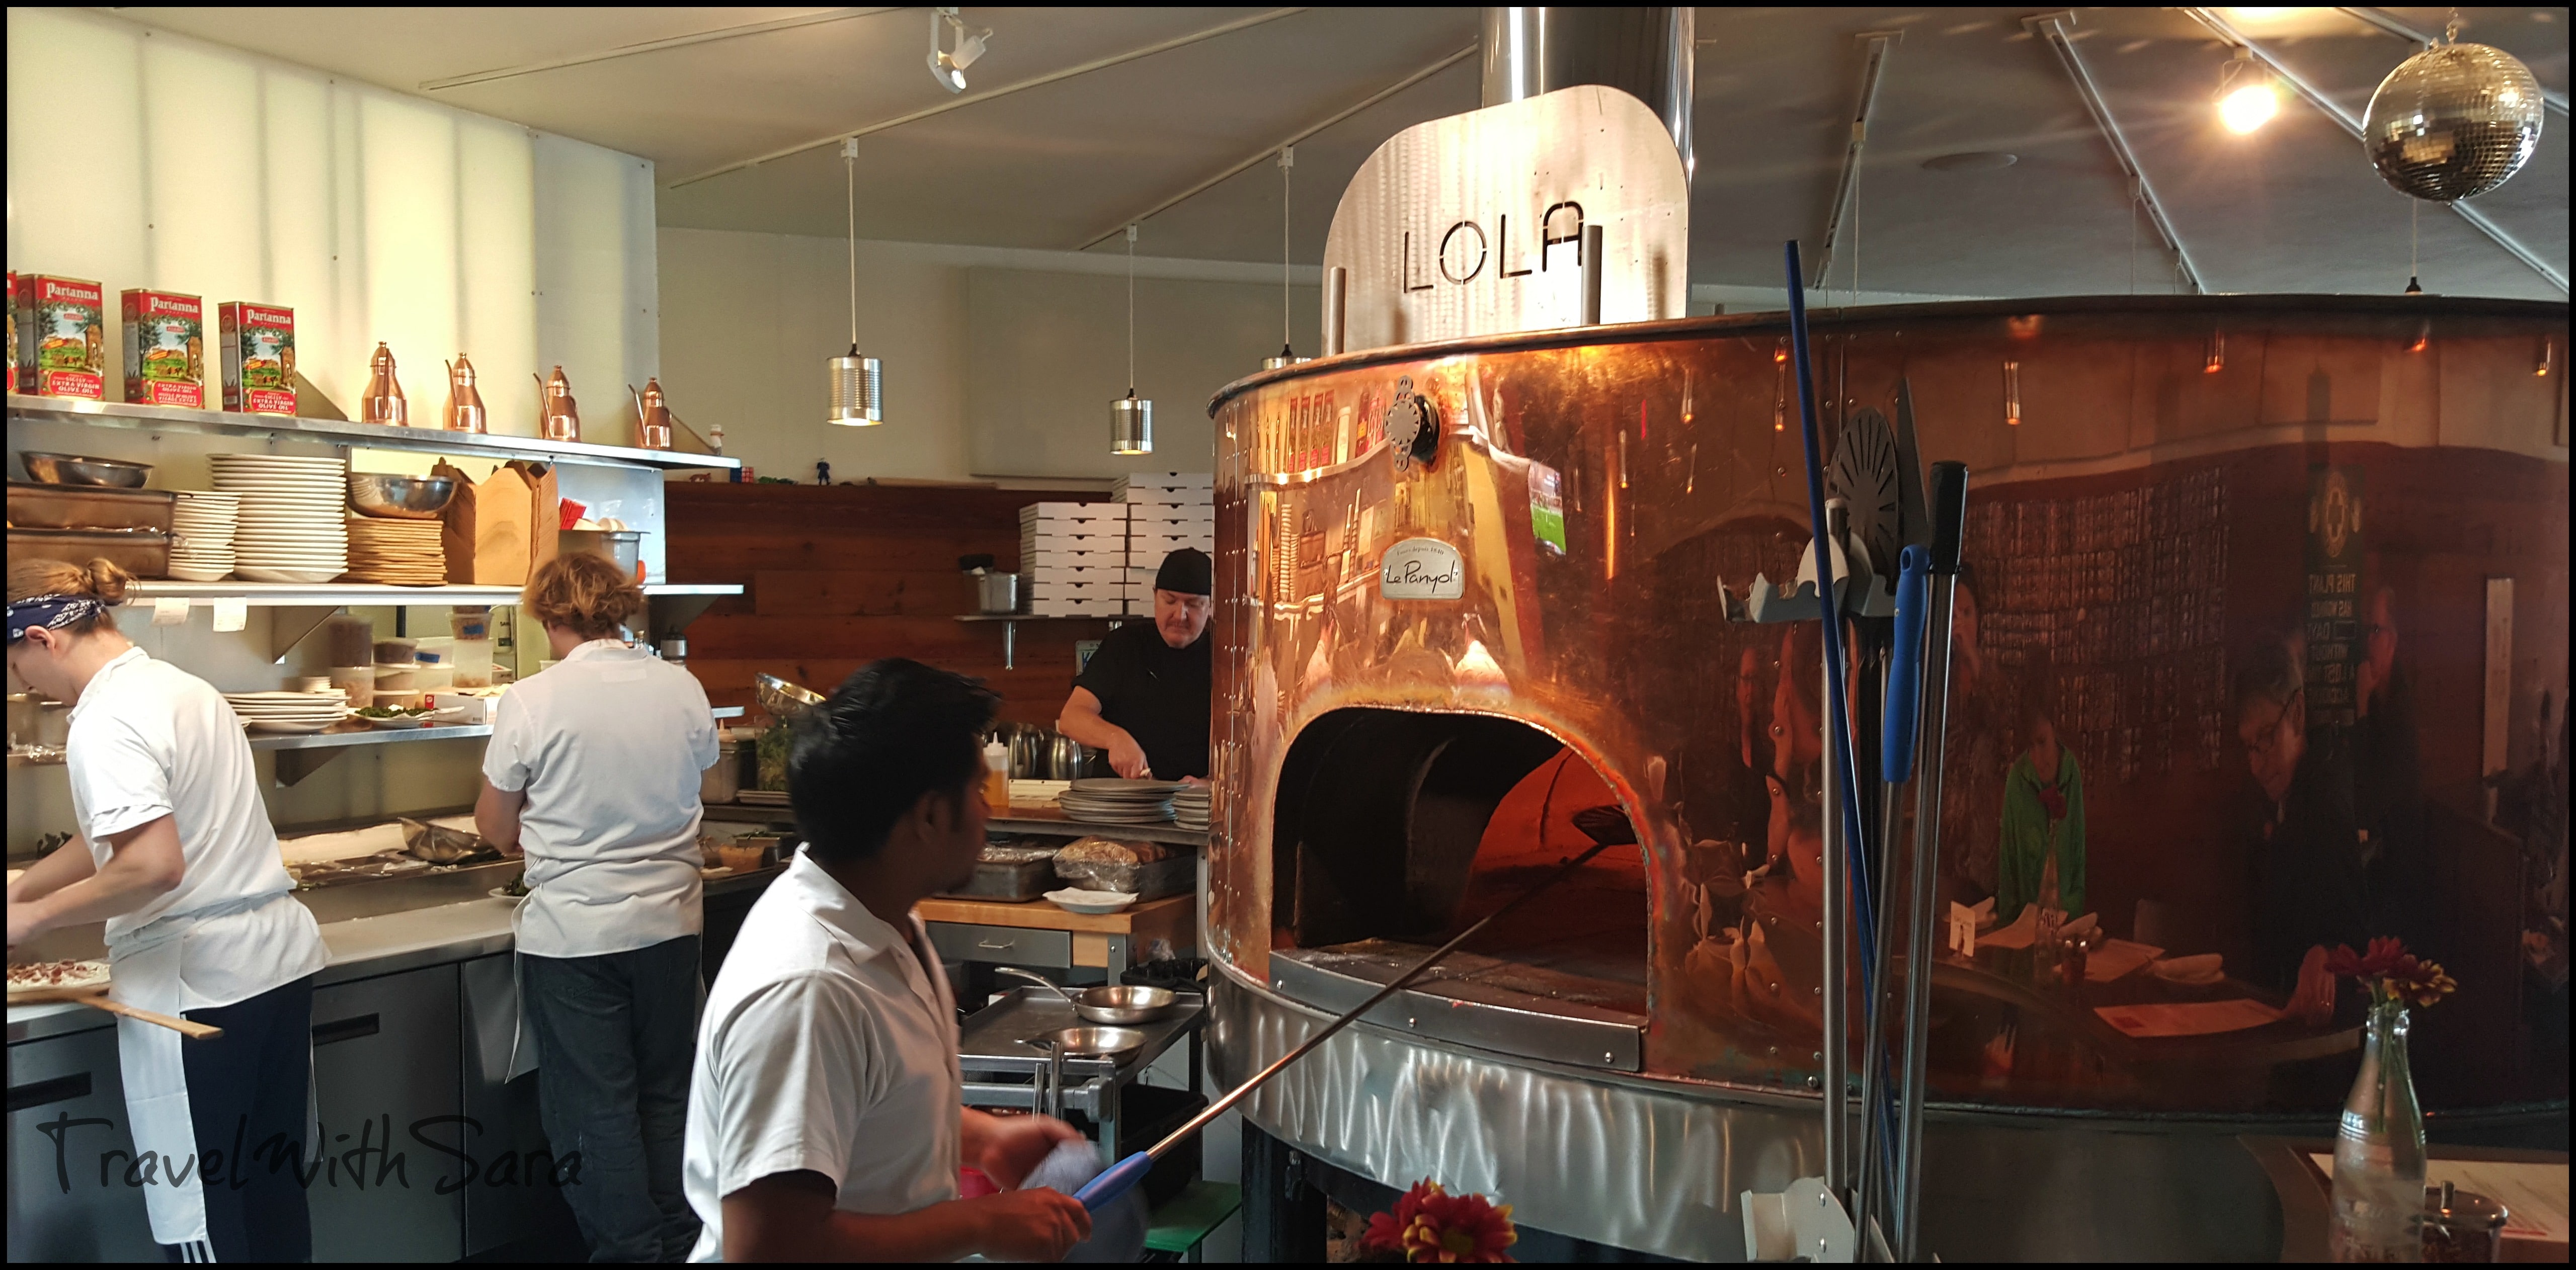 Pizzeria Lola: Making A Splash On The Foodie Scene In Minneapolis